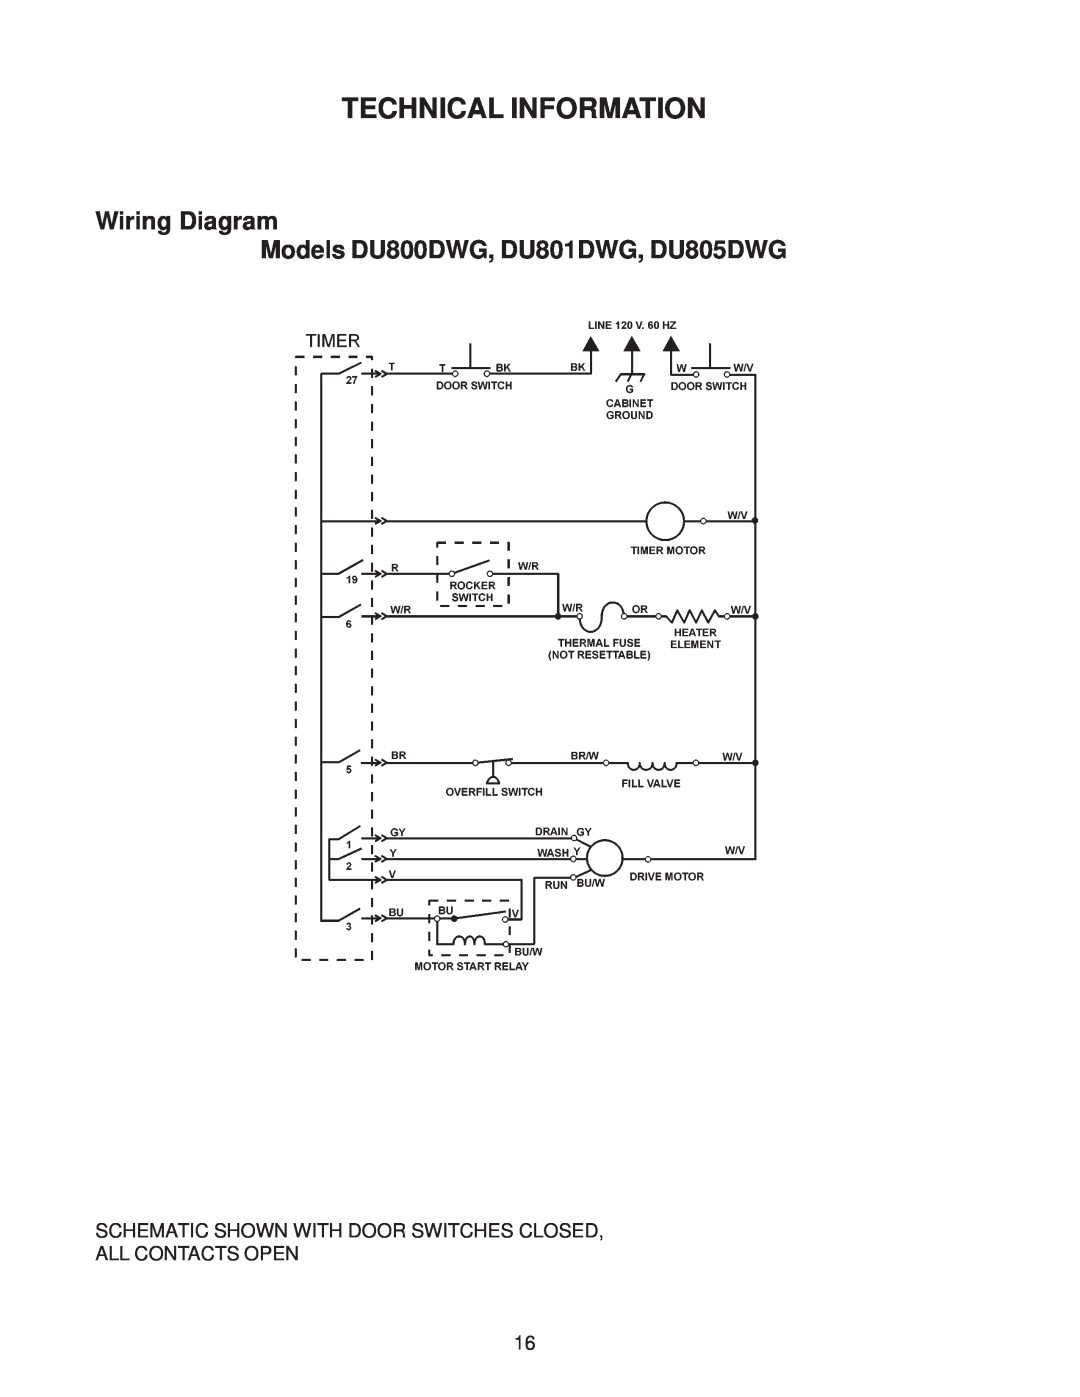 Kenmore DU910PFG, DU890DWG, DU920PFG, GU960SCG Technical Information, Wiring Diagram Models DU800DWG, DU801DWG, DU805DWG 